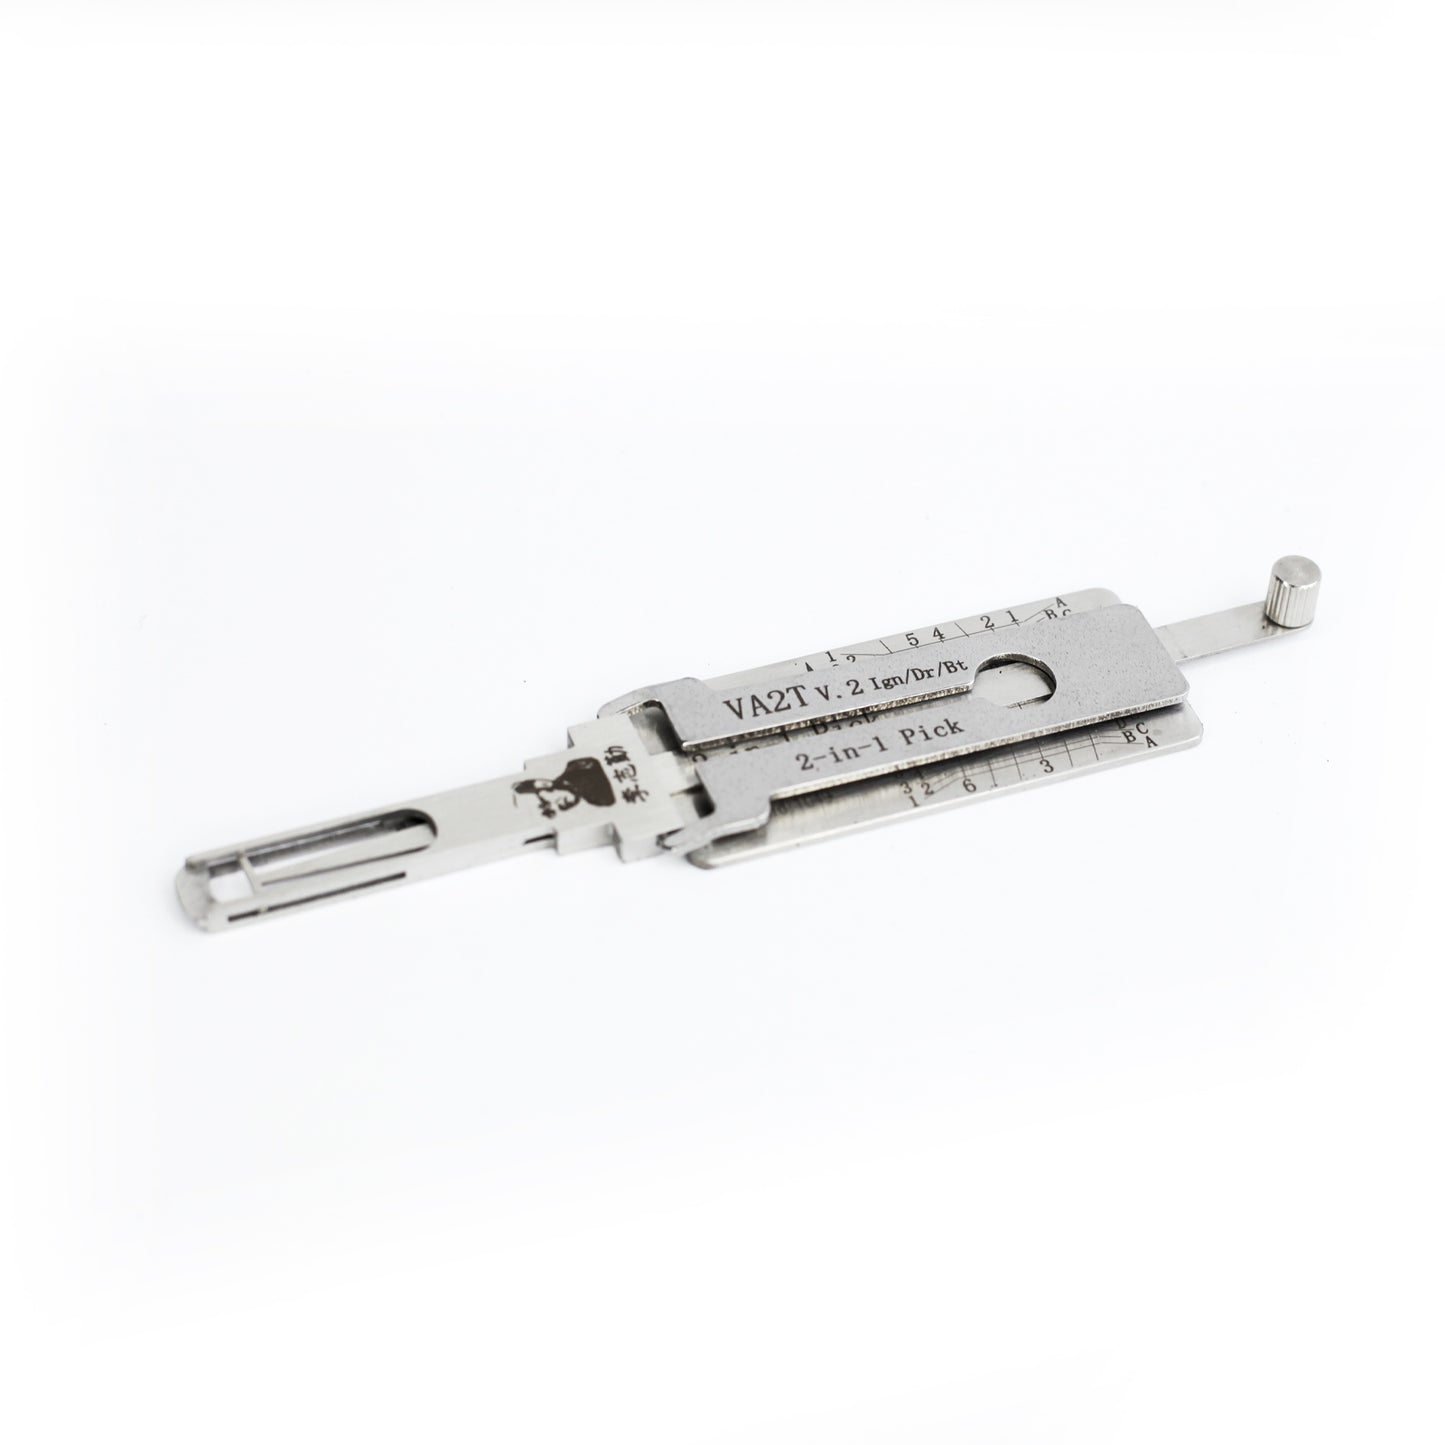 Original Auto Locksmith Tools door lishi 2-in-1Unlock ToolHigh Quality VA2T V.2 Ign/Dr/Bt Pick